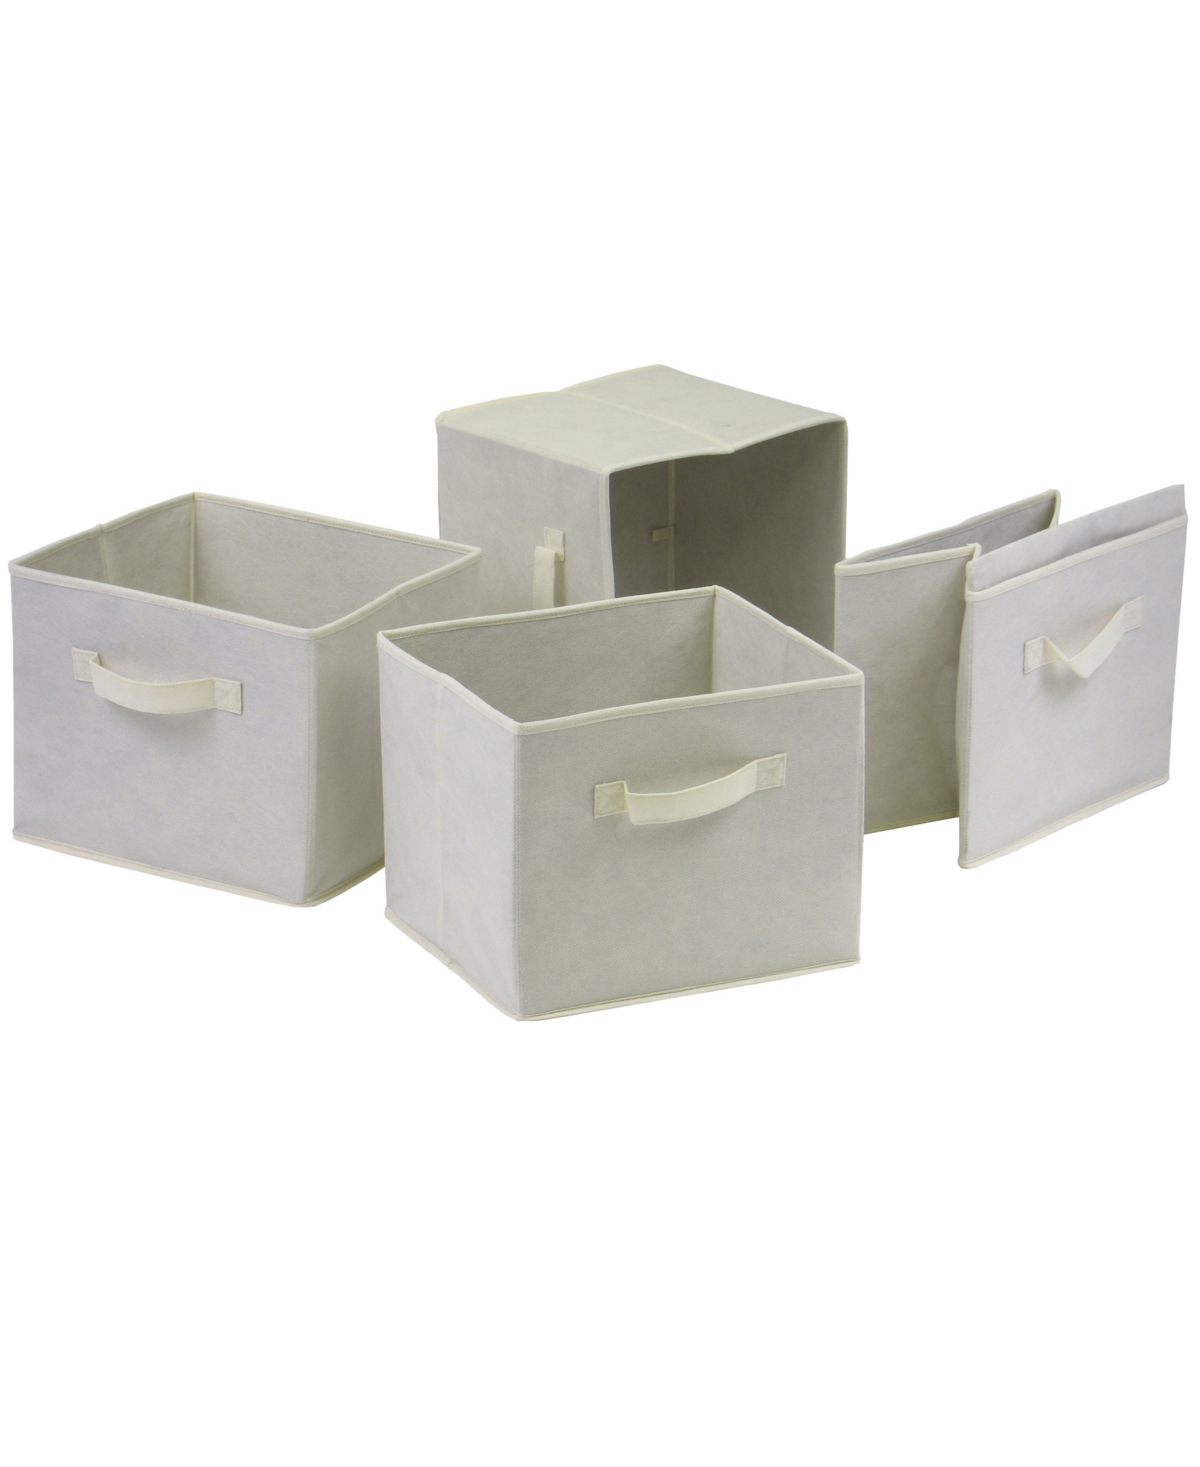 Capri Set of 4 Foldable Beige Fabric Baskets - Beige